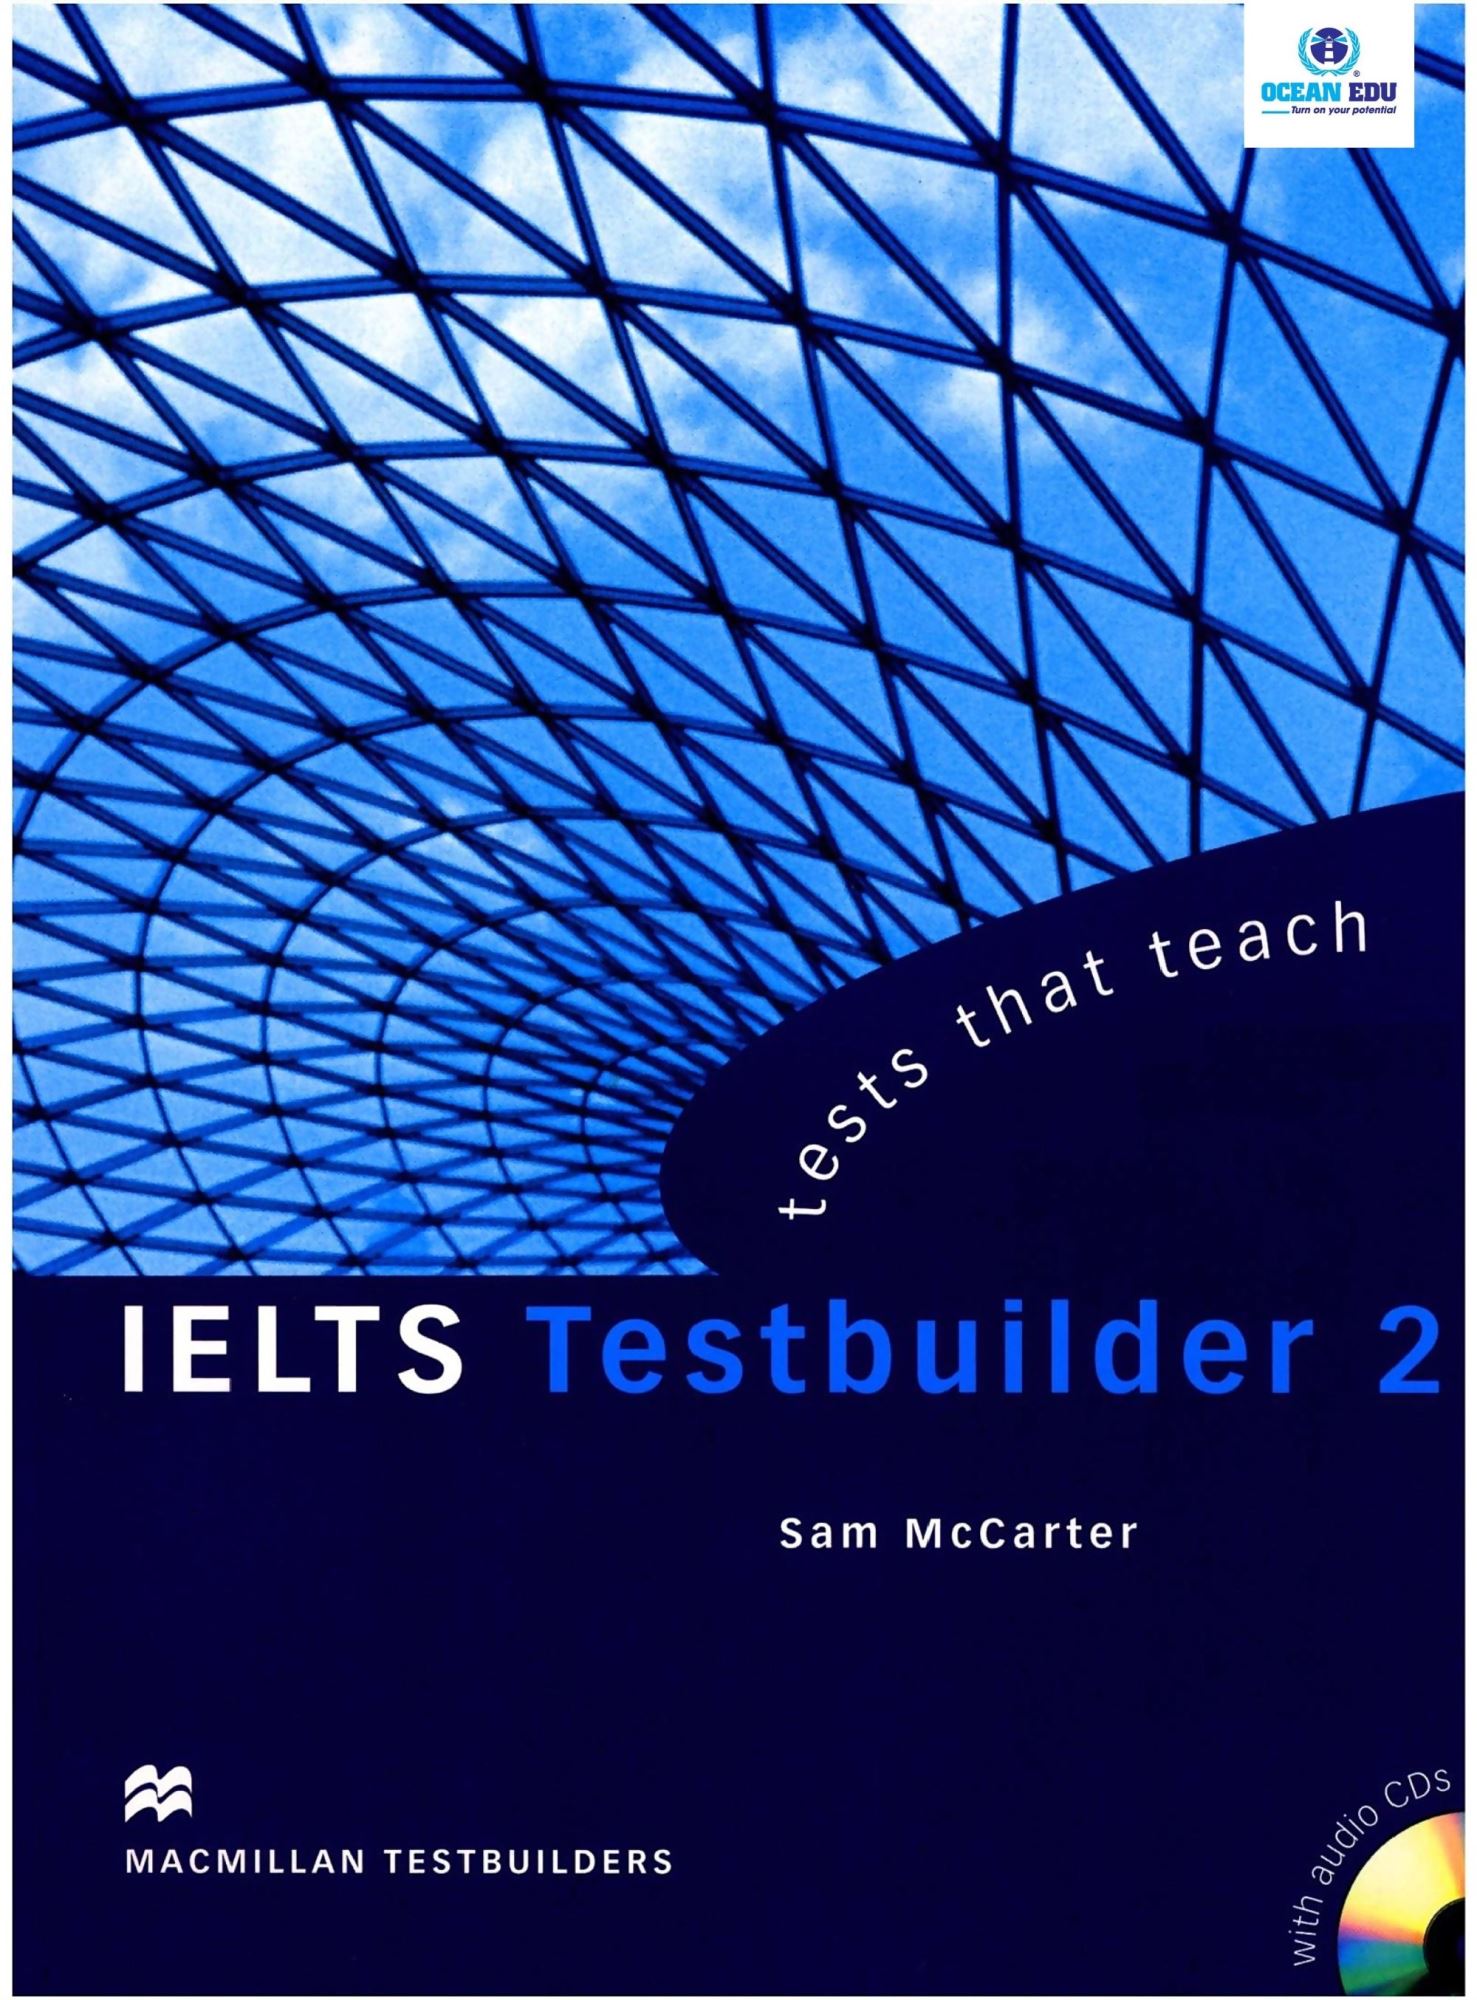 IELTS Testbuilder 2